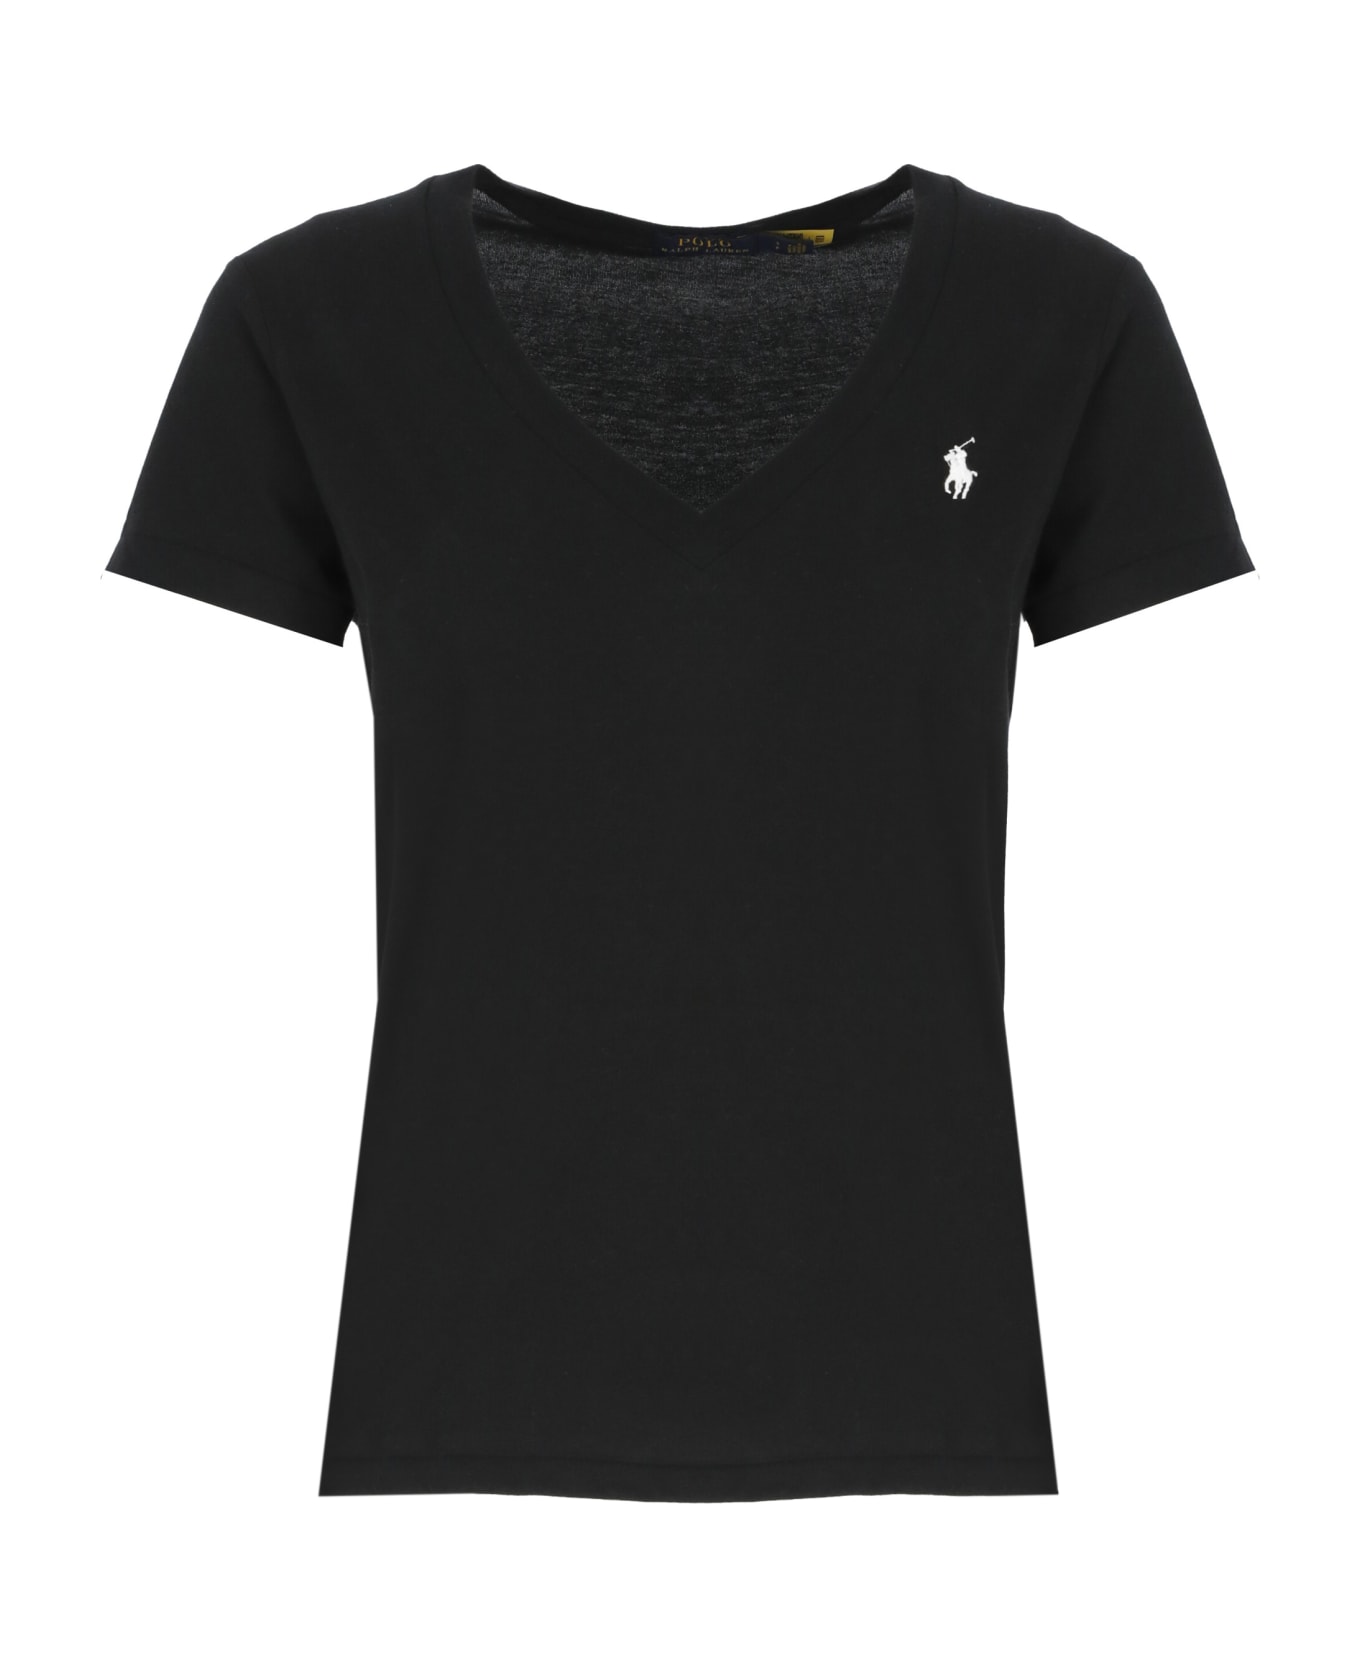 Ralph Lauren Pony T-shirt - Black